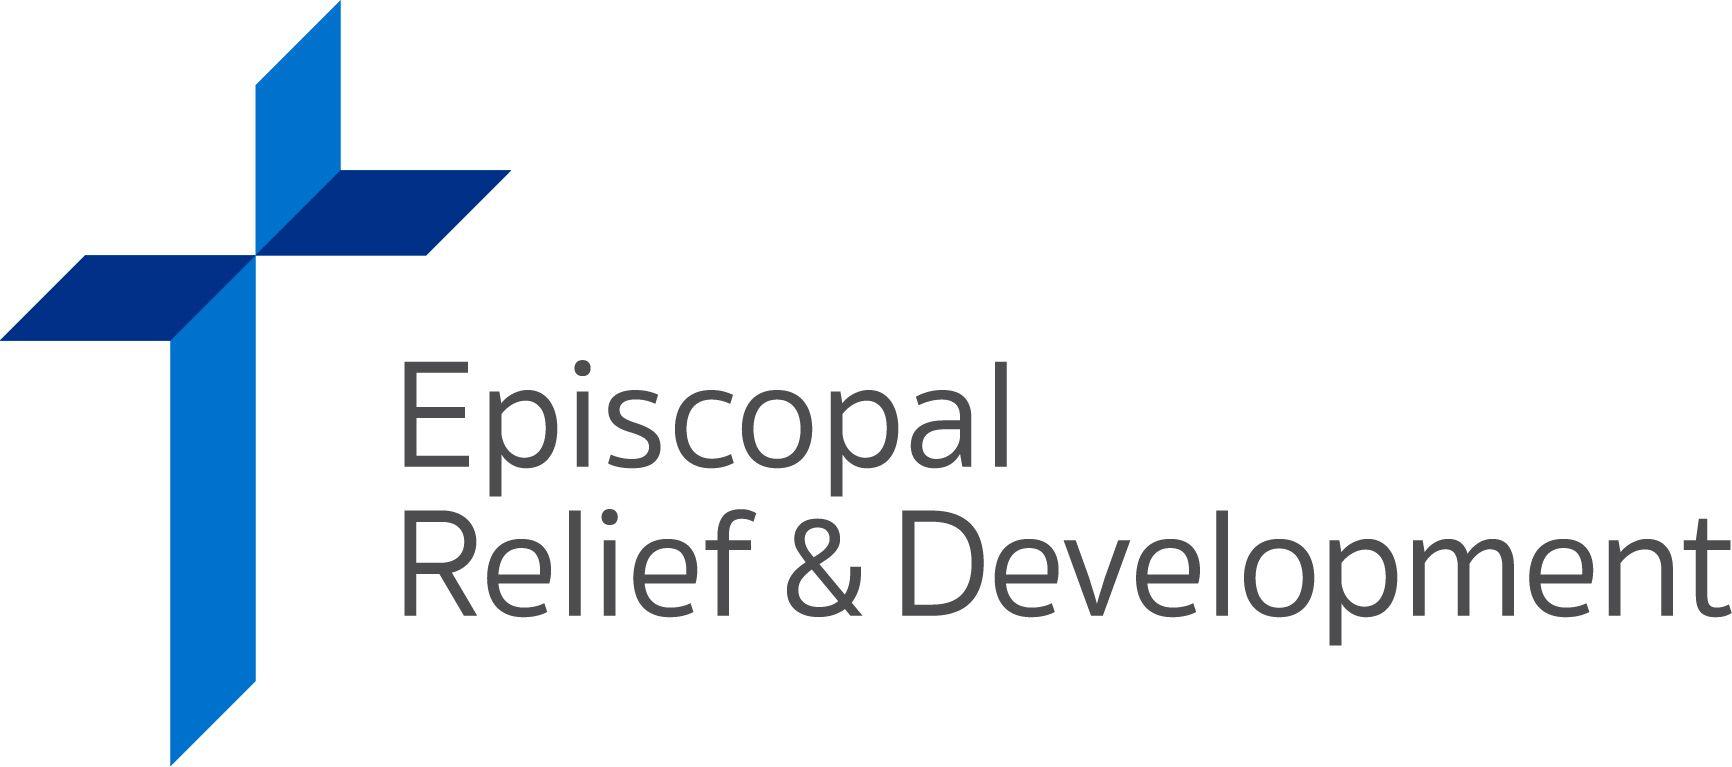 Development Logo - Online press kit - Episcopal Relief & Development